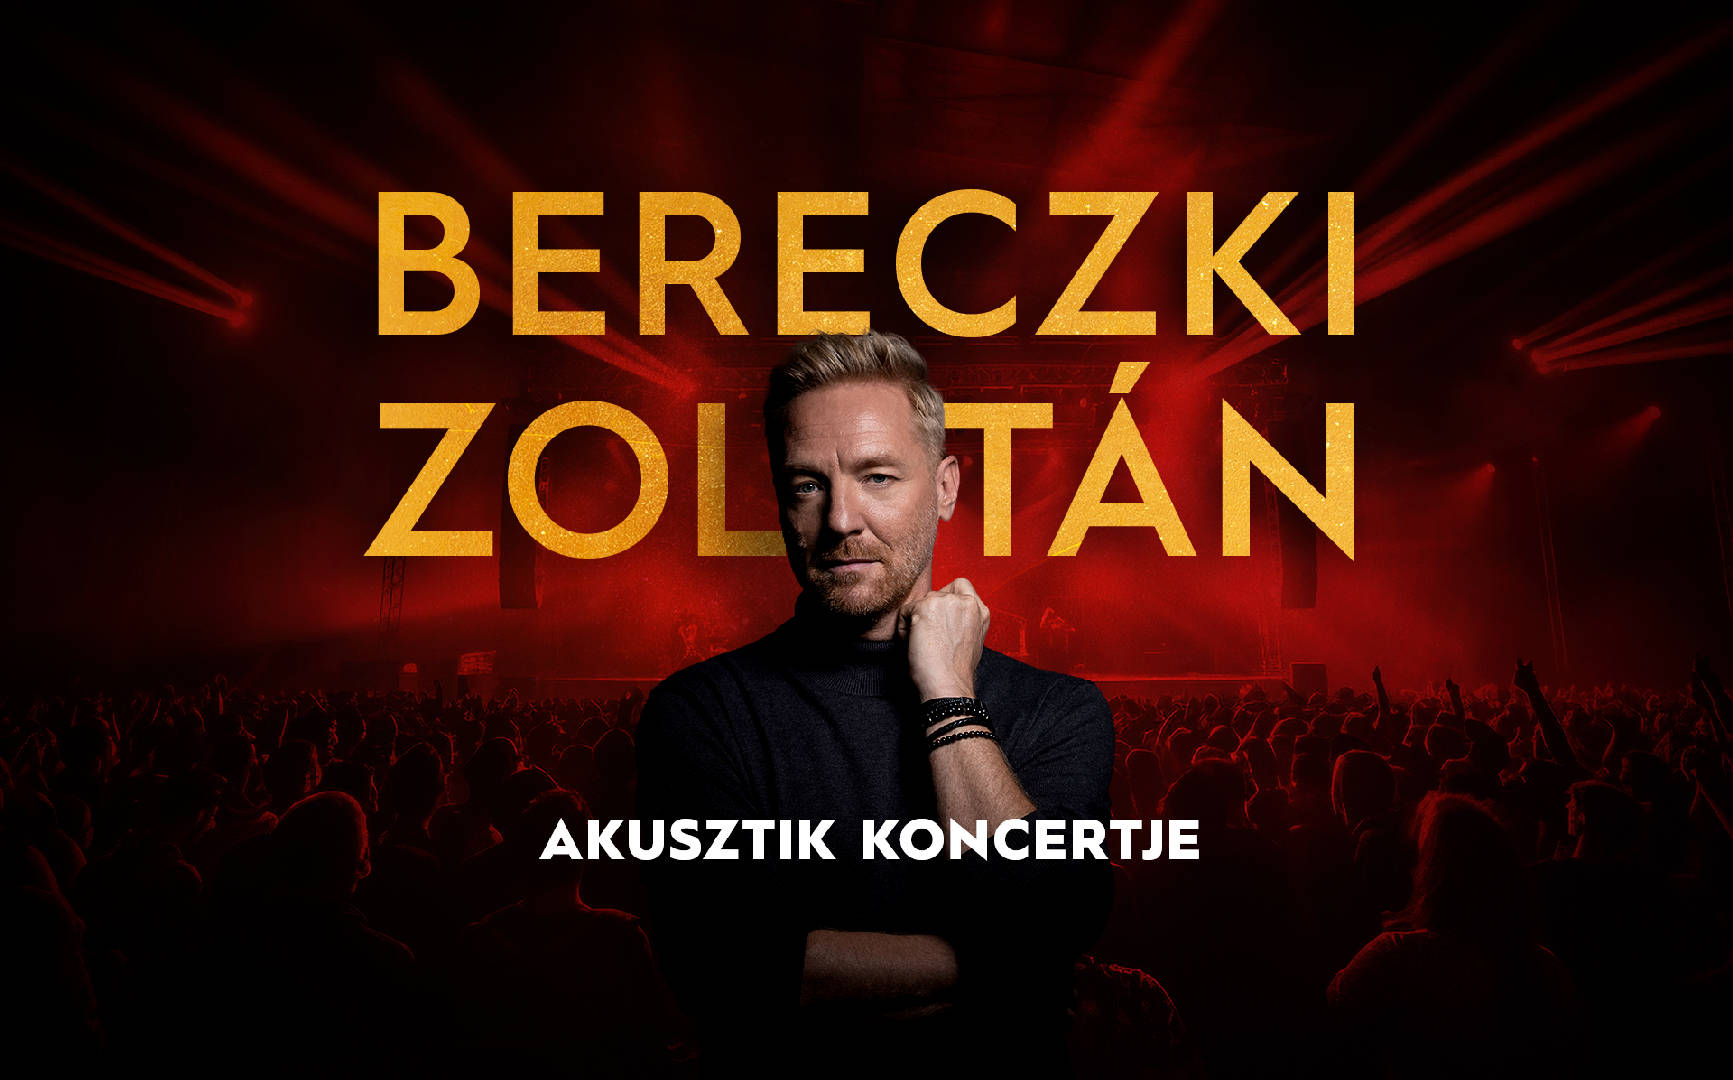 Bereczki Zoltán koncert - DEBRECEN